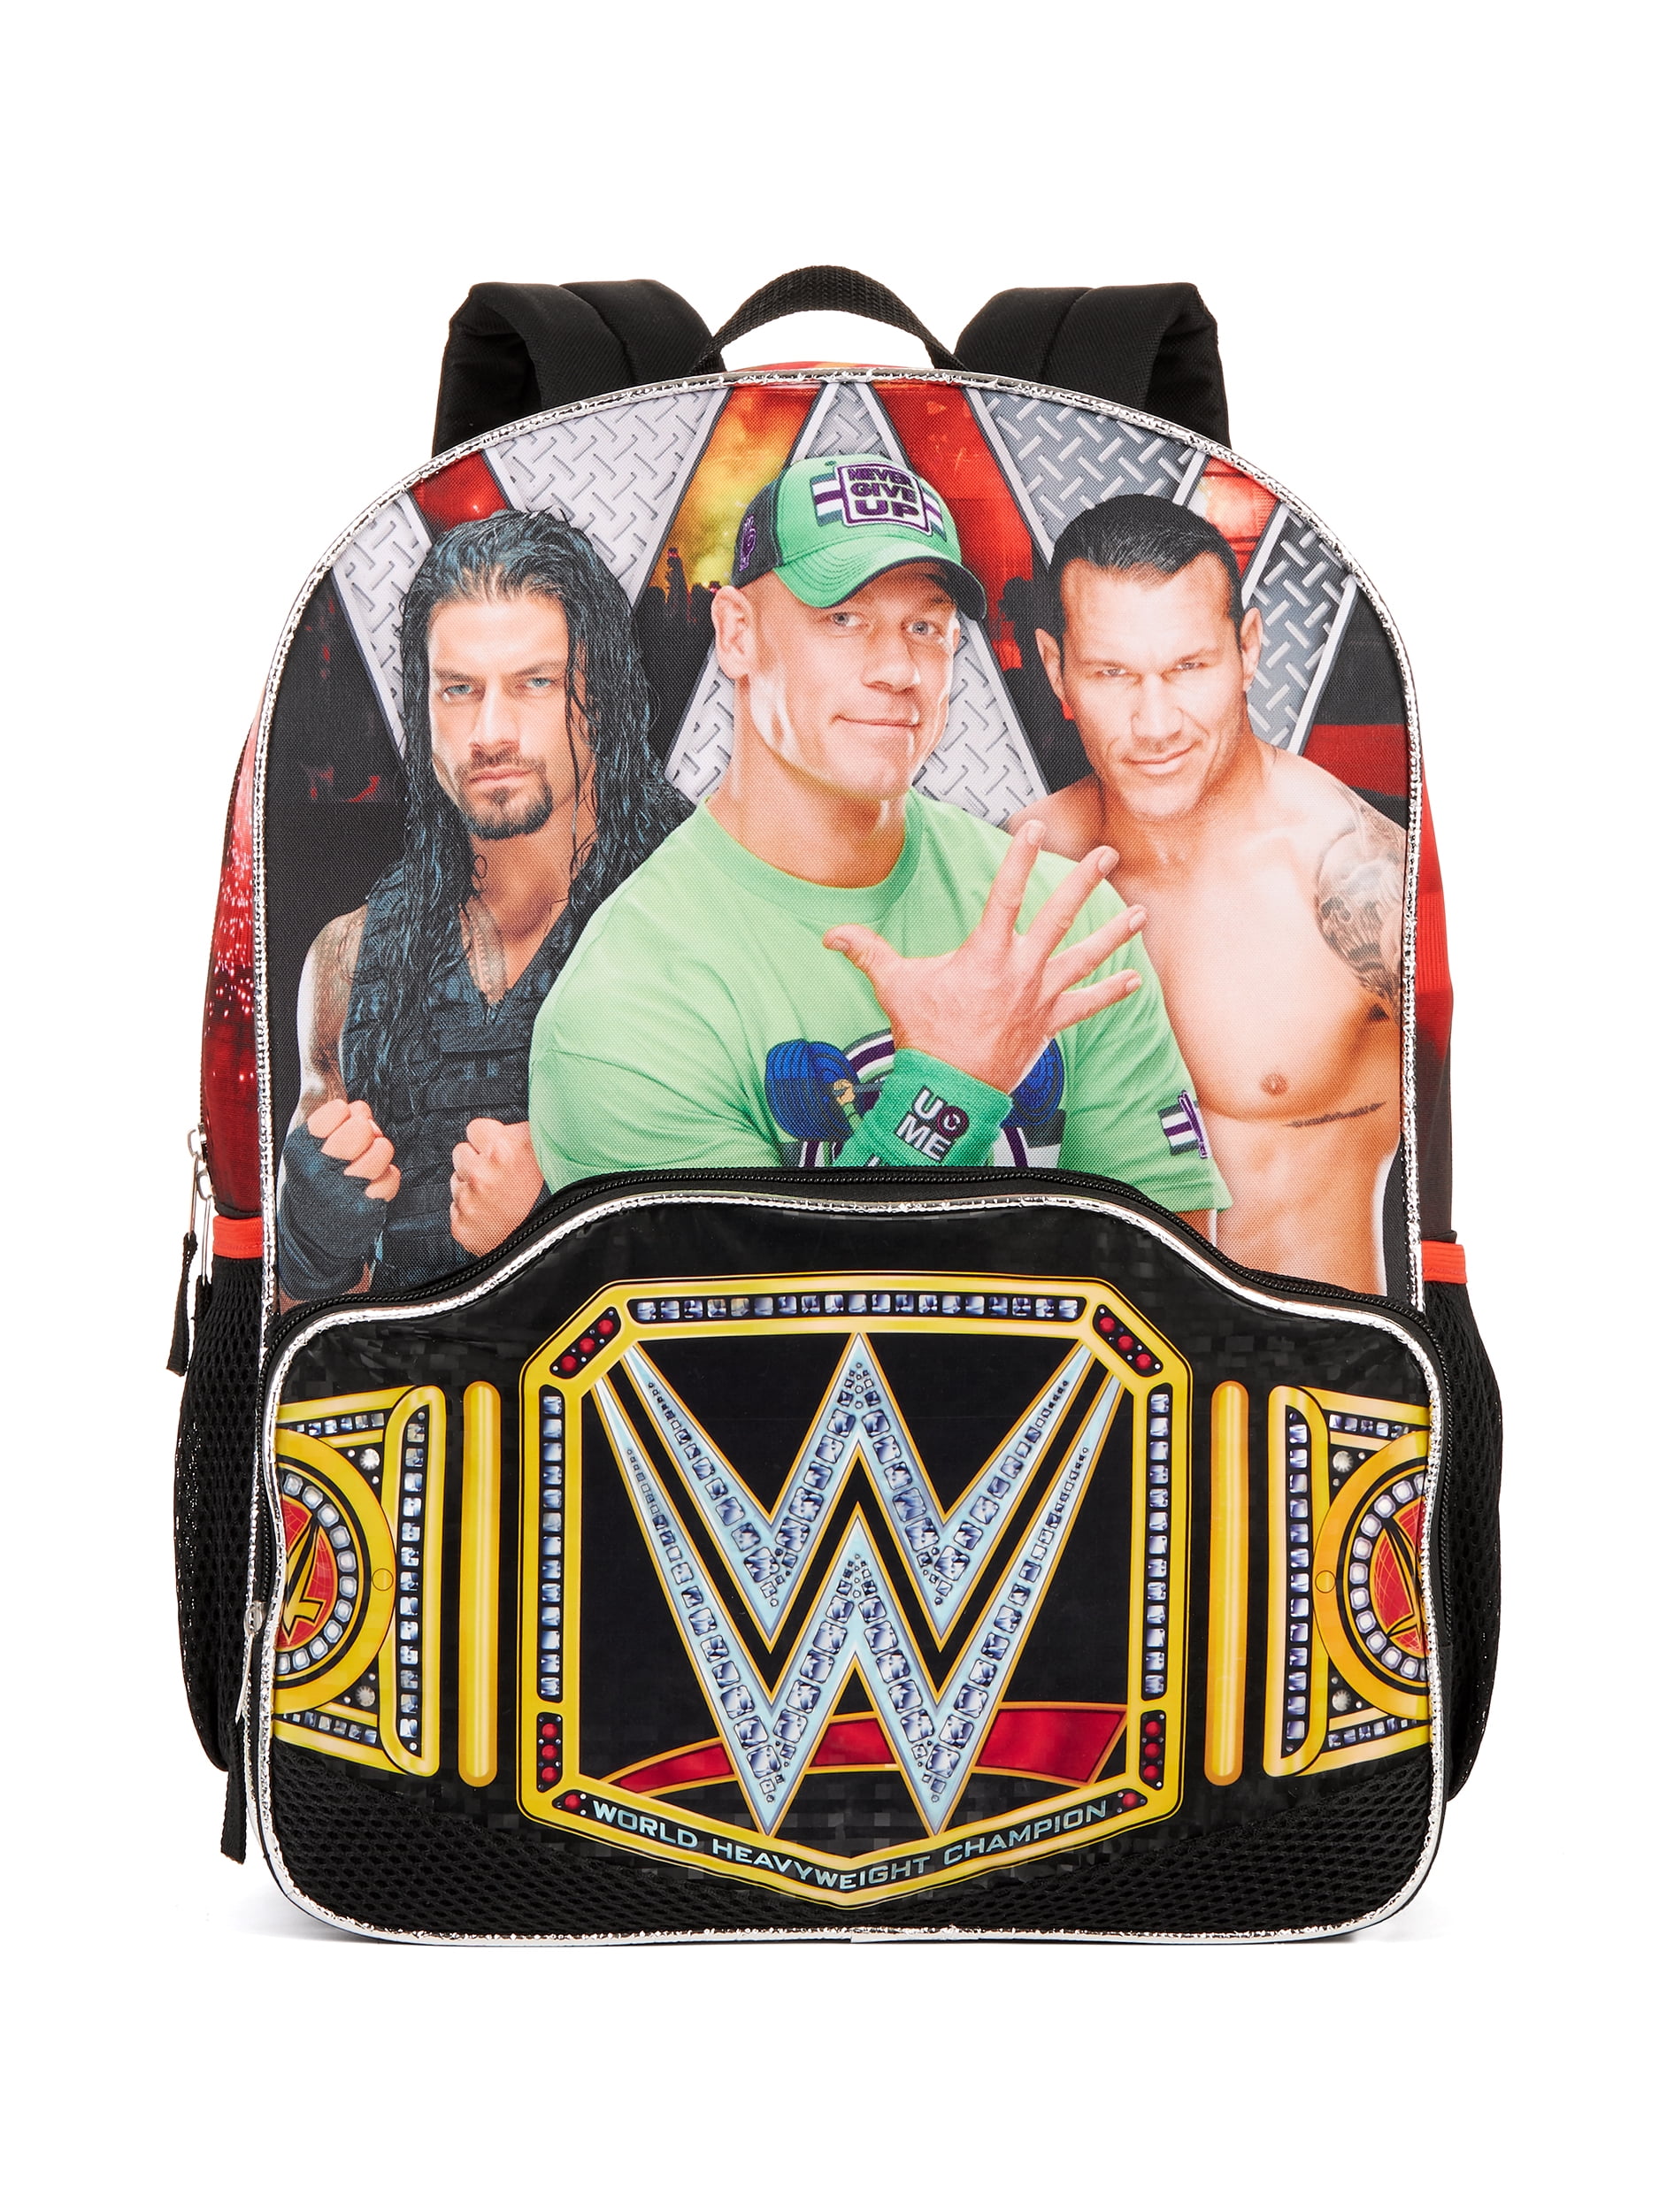 WWE Boys Wrestle Backpack One Size 